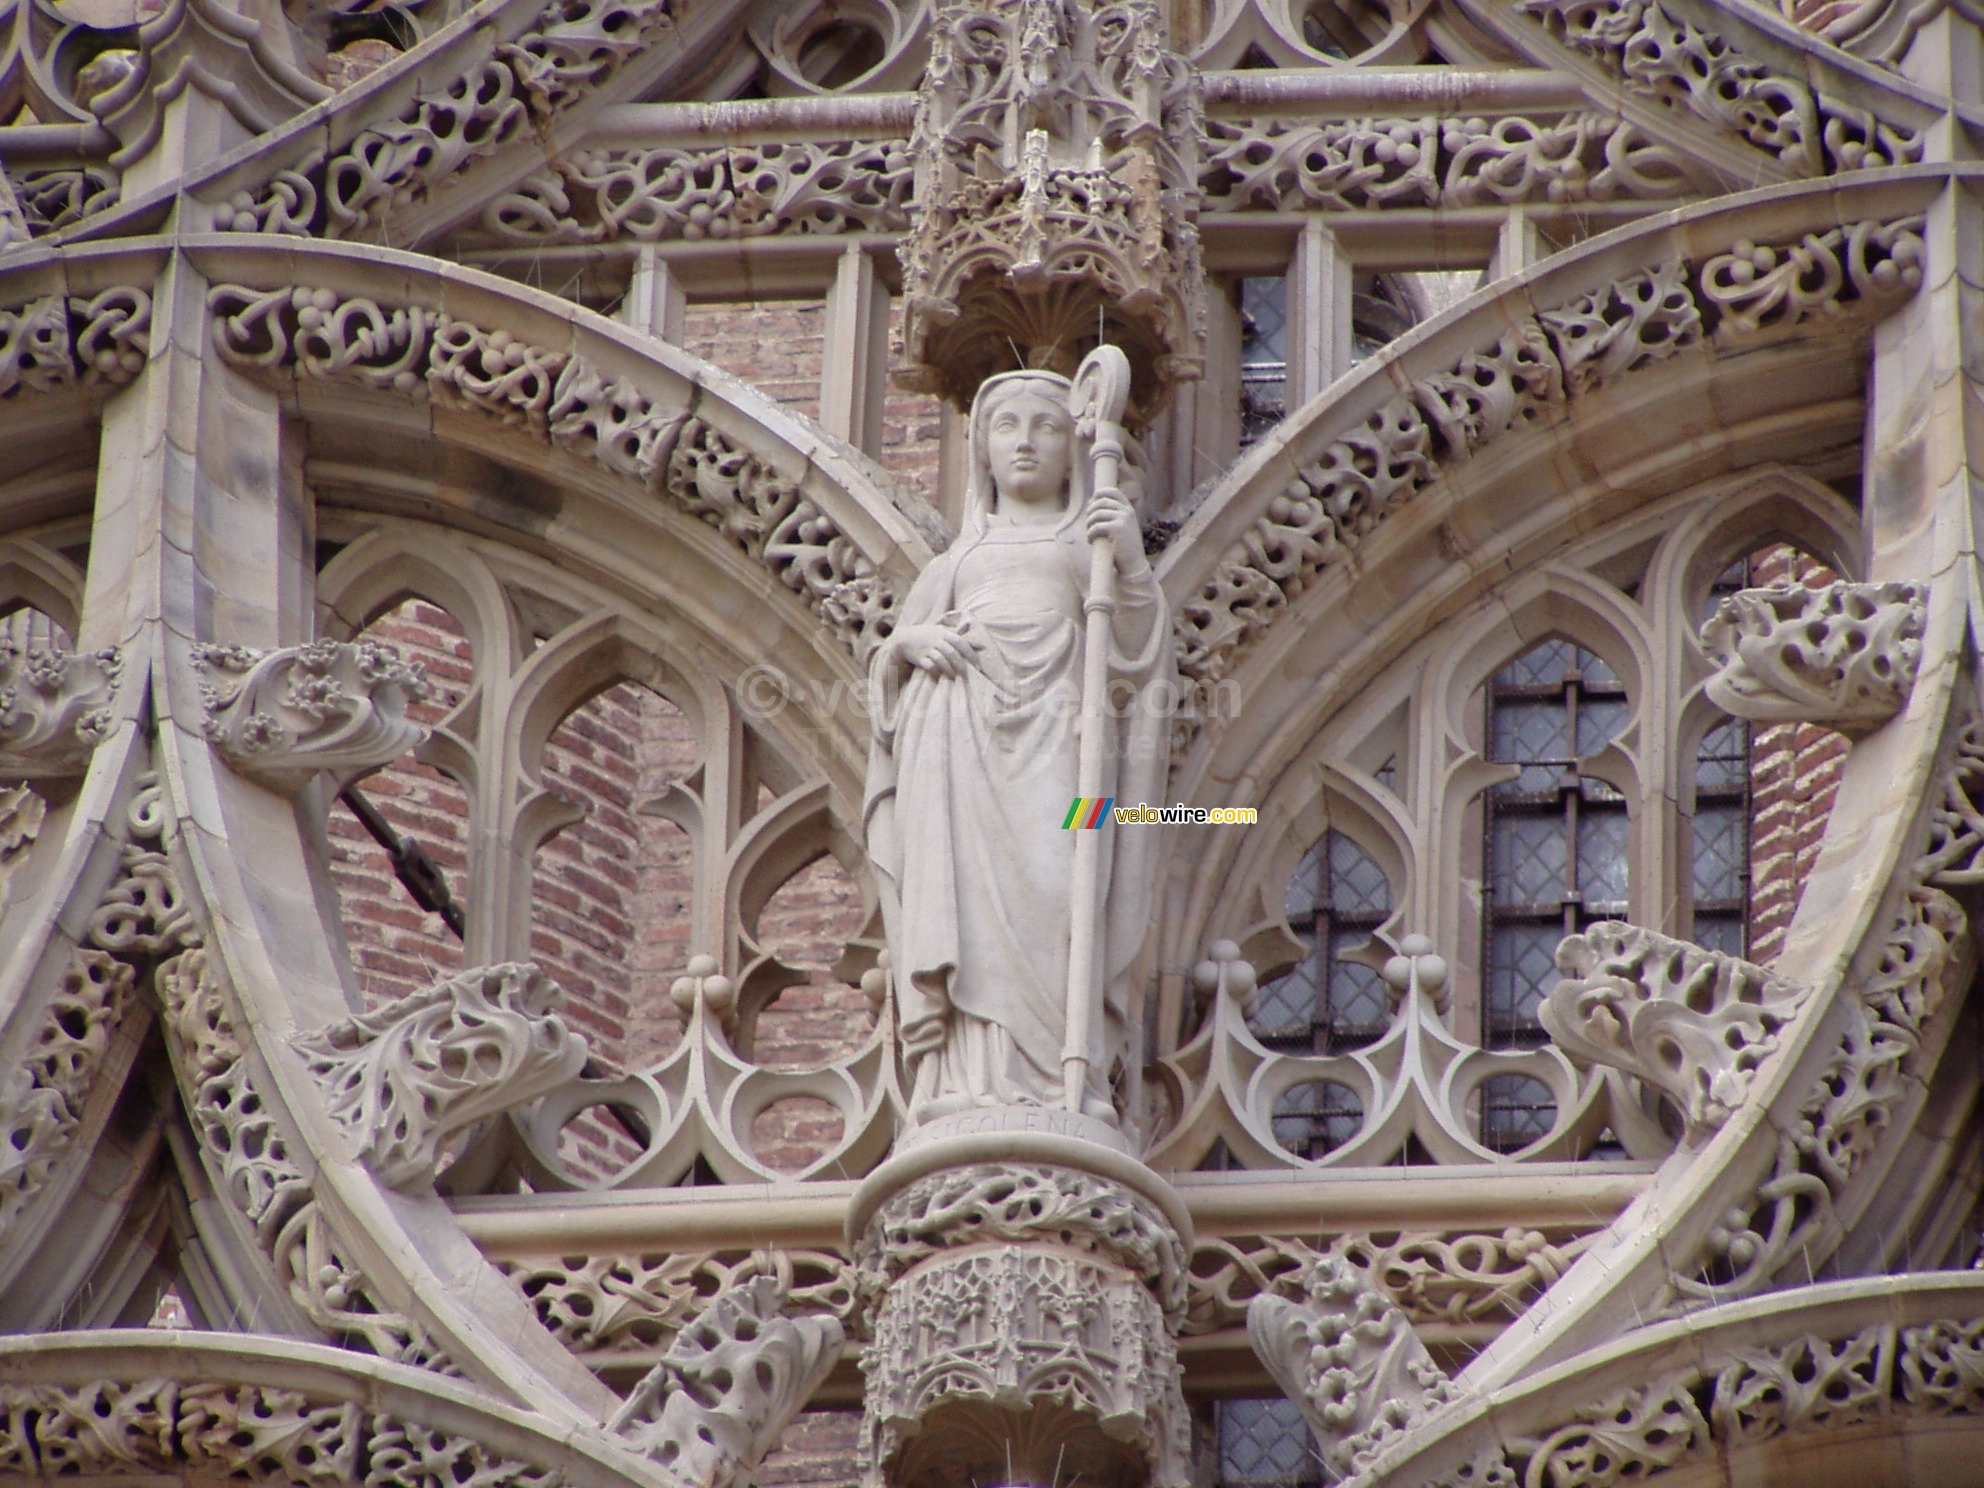 A detail of the entrance of the Basilique Sainte-Ccile